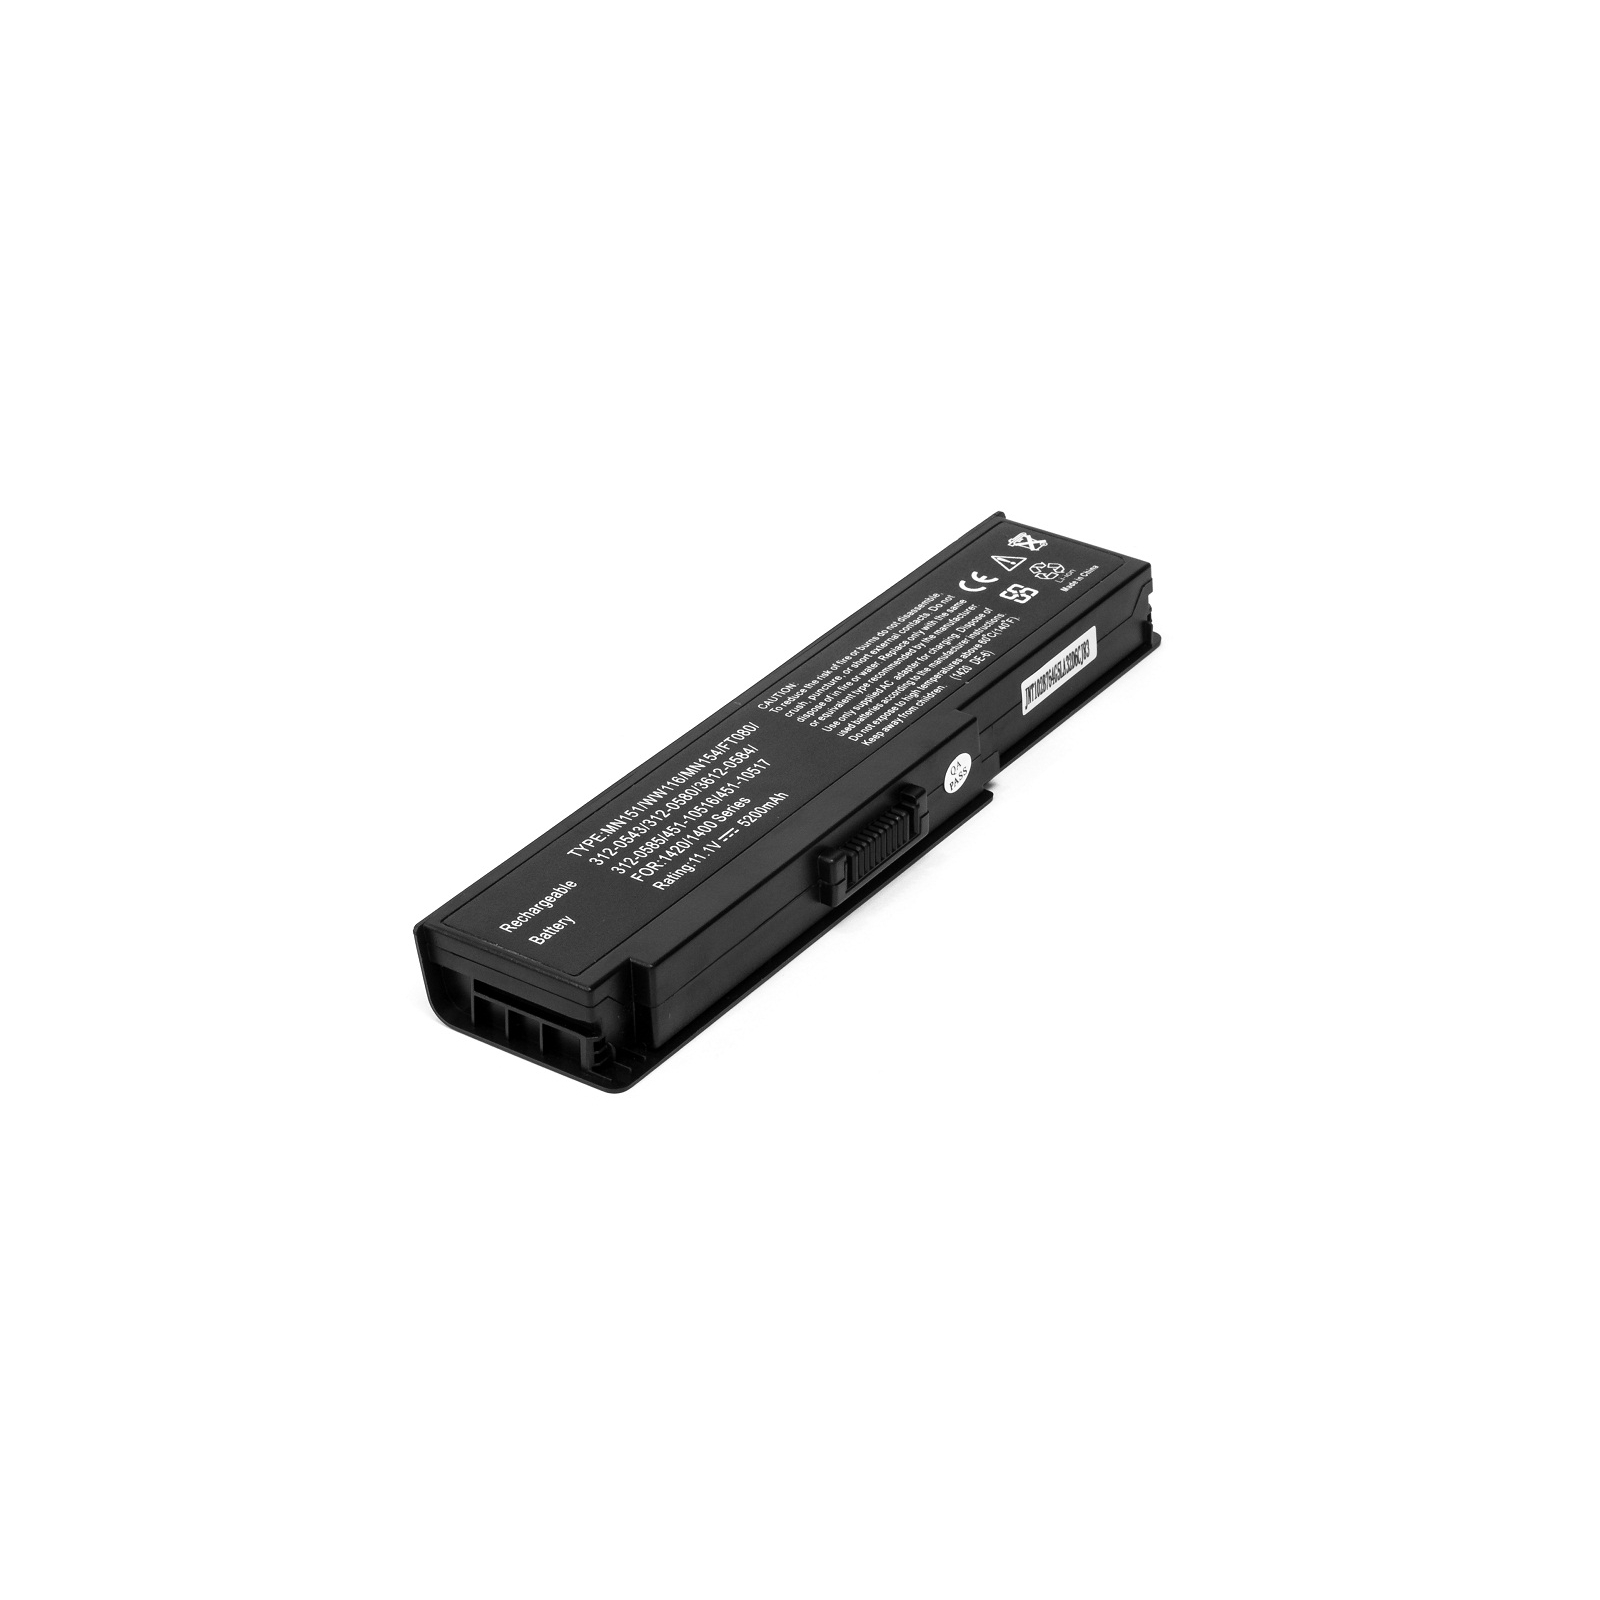 Аккумулятор для ноутбука DELL Inspiron 1400 (MN151 DE-1420-6) 11.1V 5200mAh PowerPlant (NB00000177)